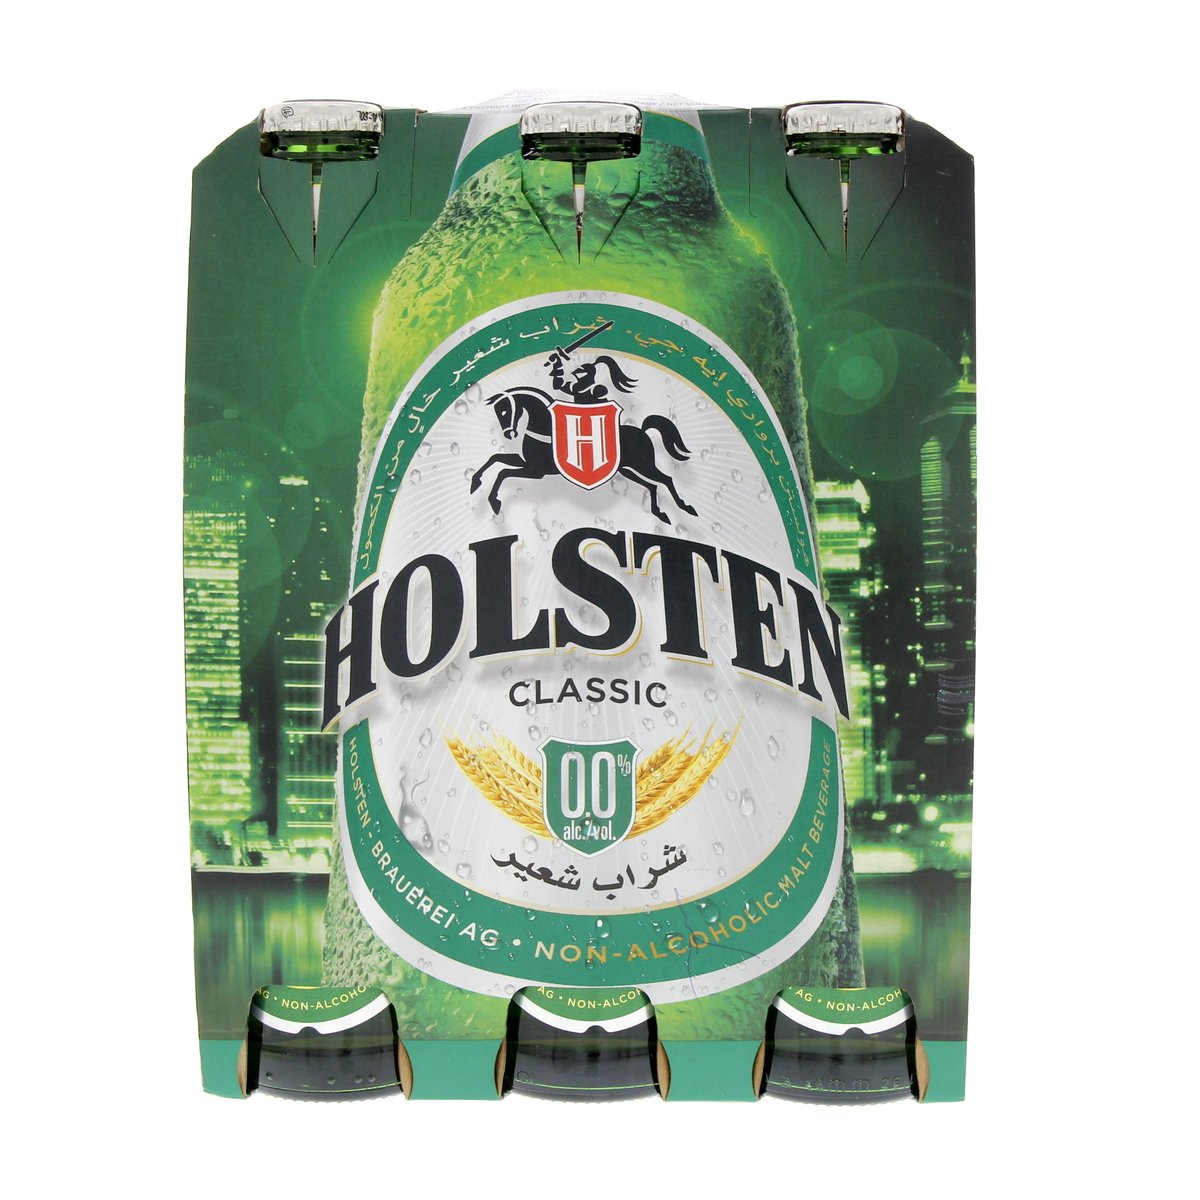 Holsten Classic Non Alcoholic Beer 6 x 330 ml